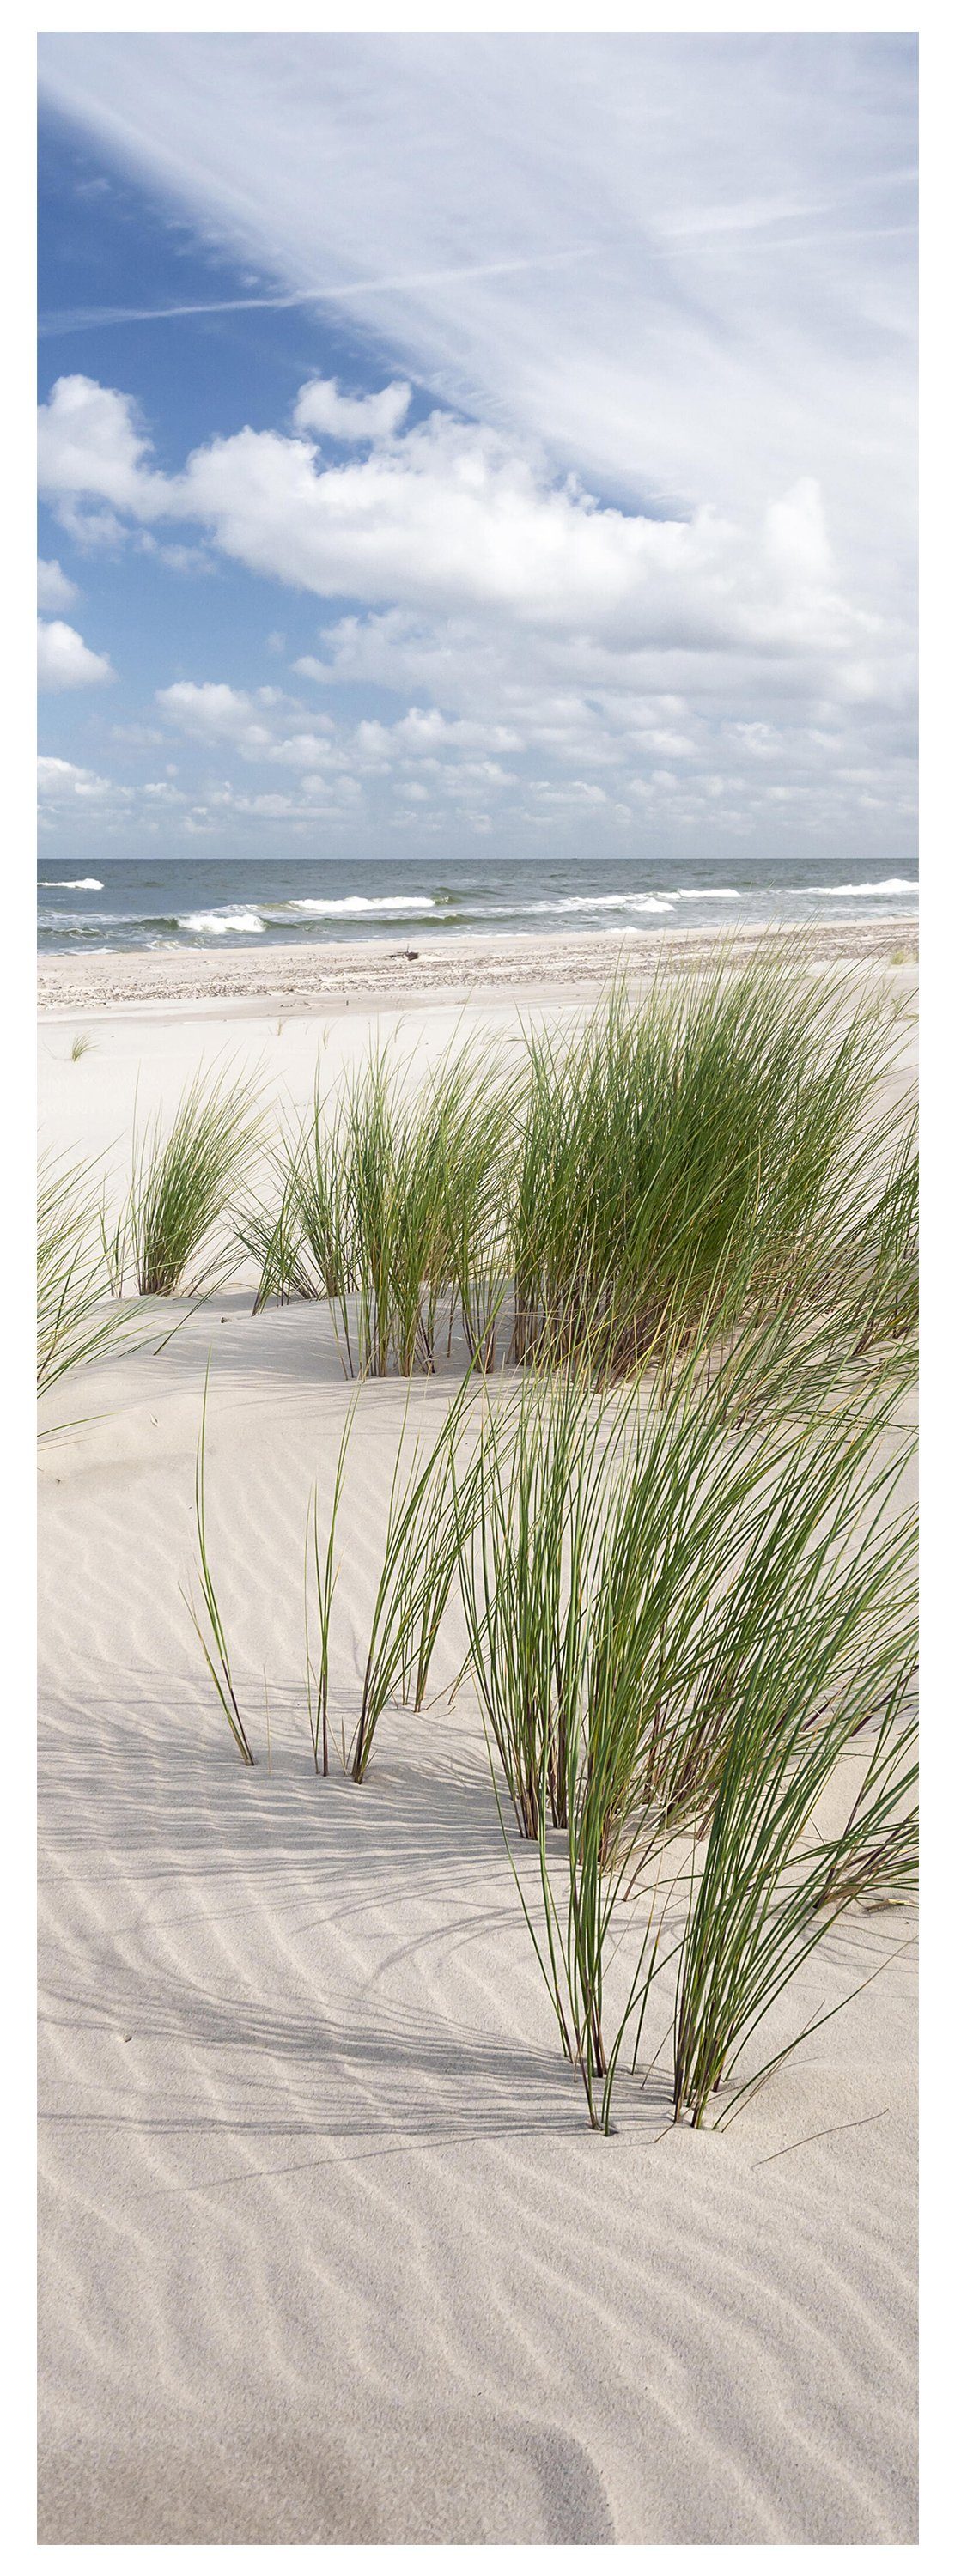 wandmotiv24 Türtapete Gräser am Sand-strand, Meer, Wasser, glatt, Fototapete, Wandtapete, Motivtapete, matt, selbstklebende Dekorfolie